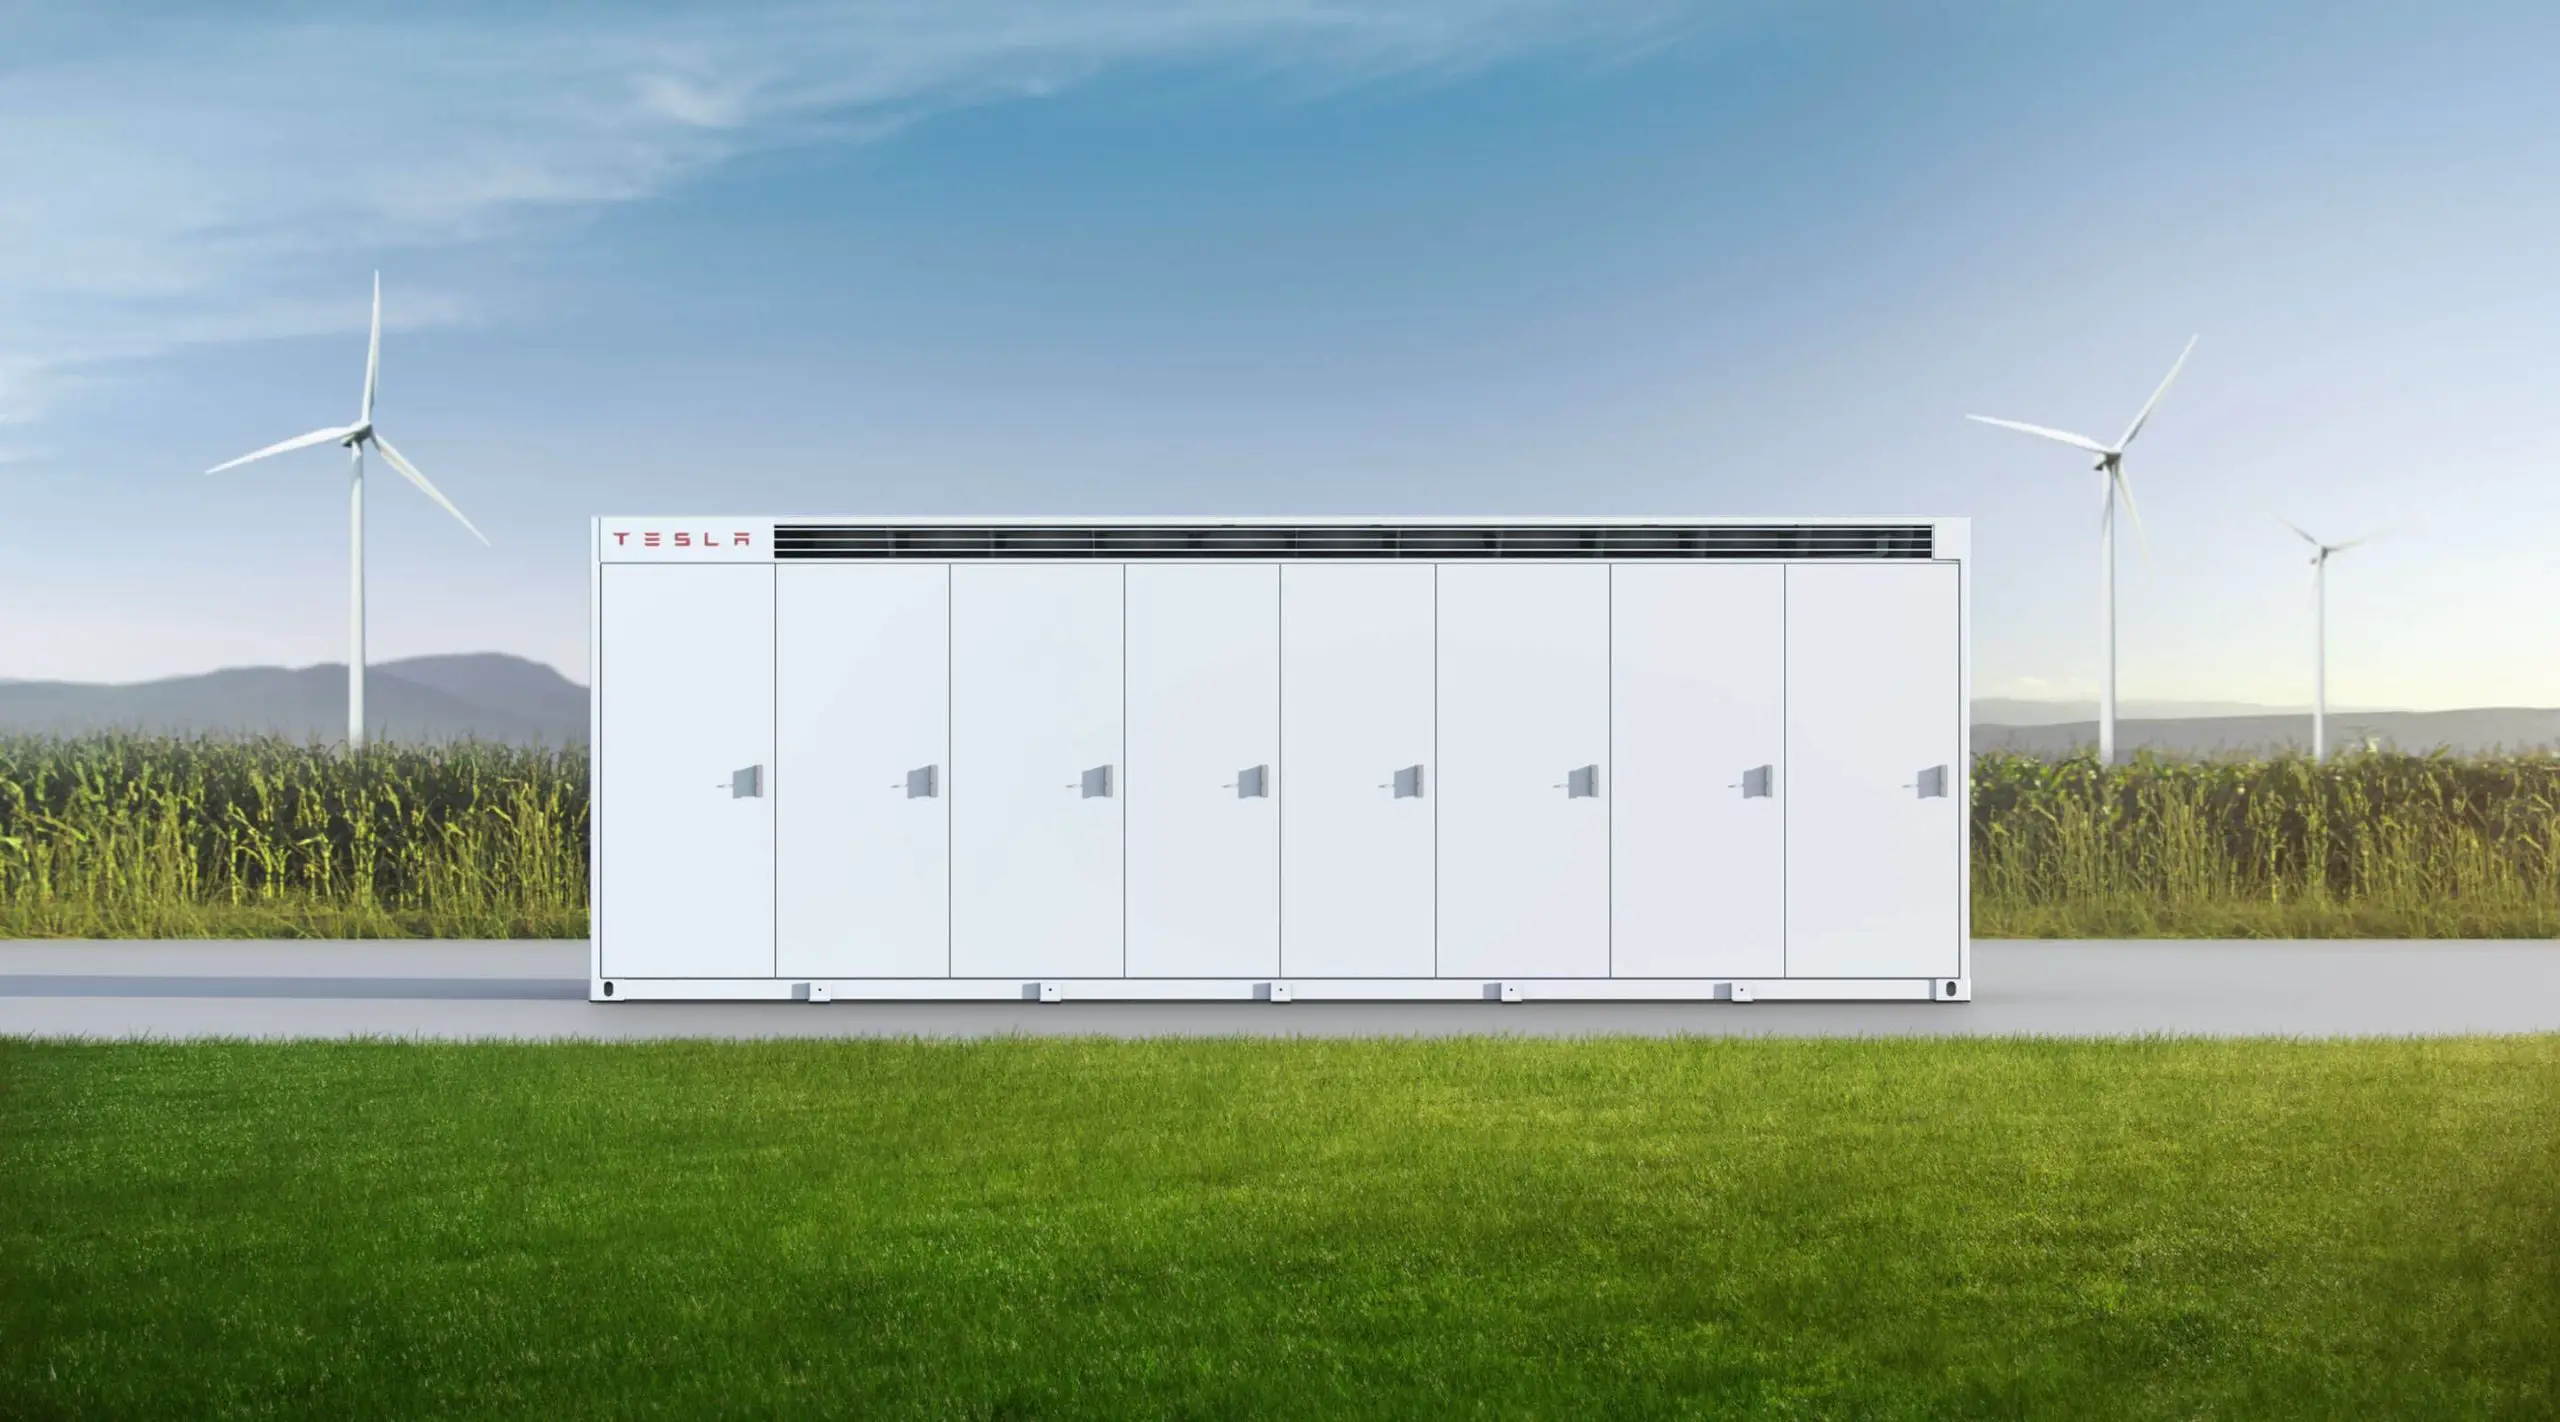 Tesla Powerpack - Commercial Solar Energy Storage